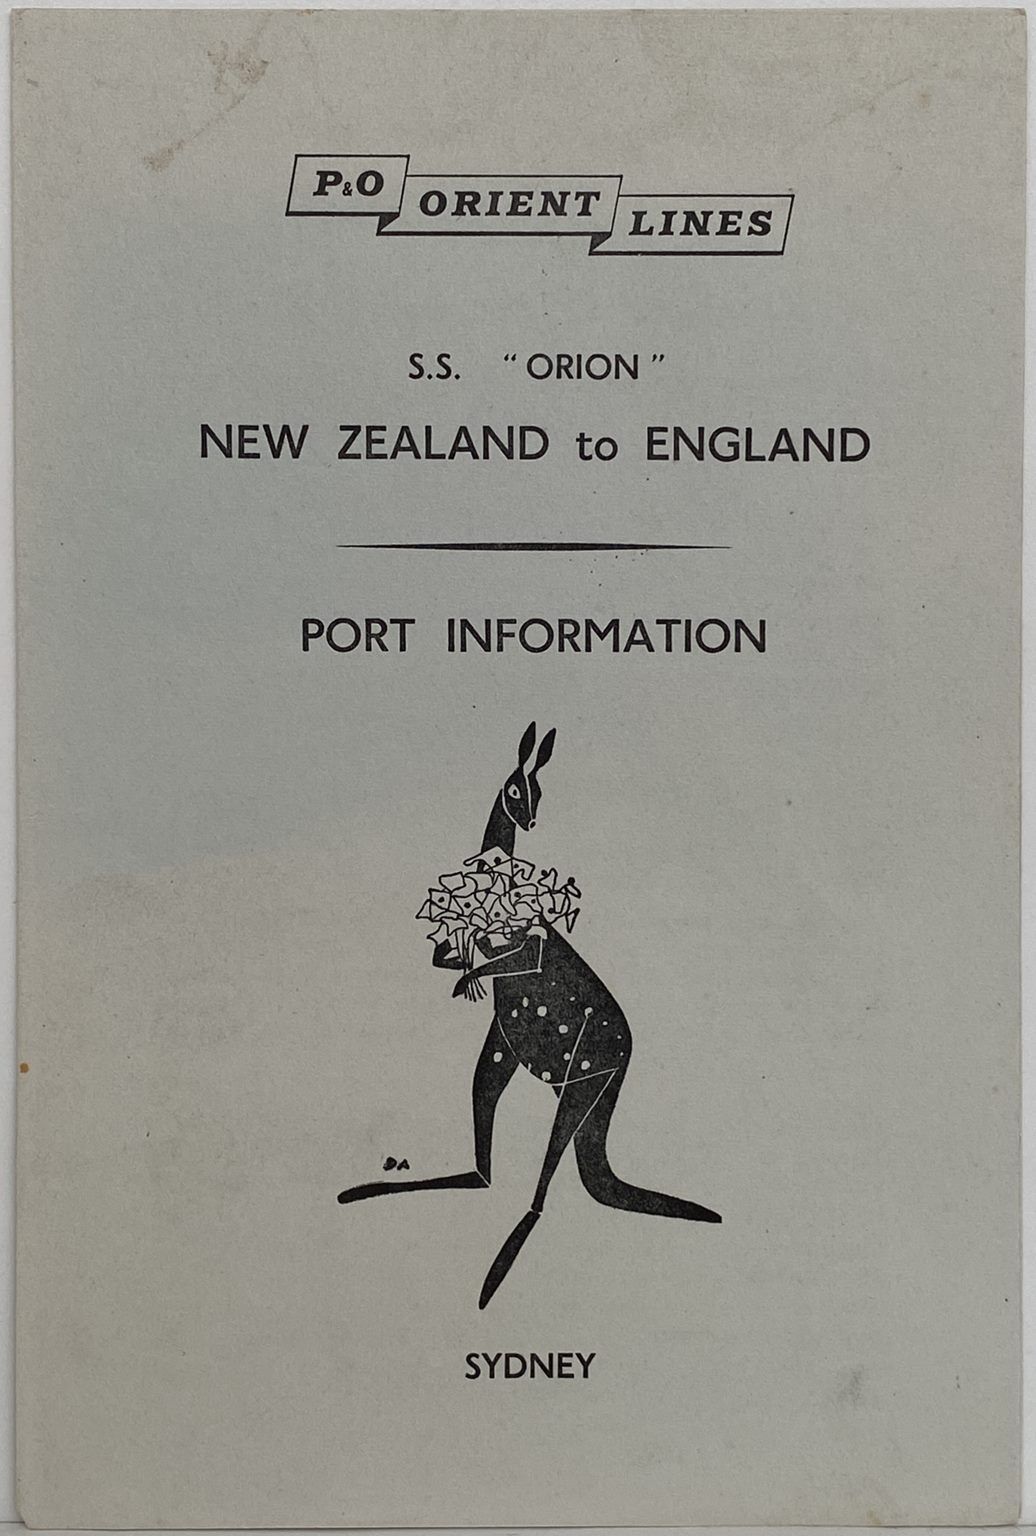 MARITIME MEMORABILIA: P&O Orient Lines - Port Information for Sydney 1962